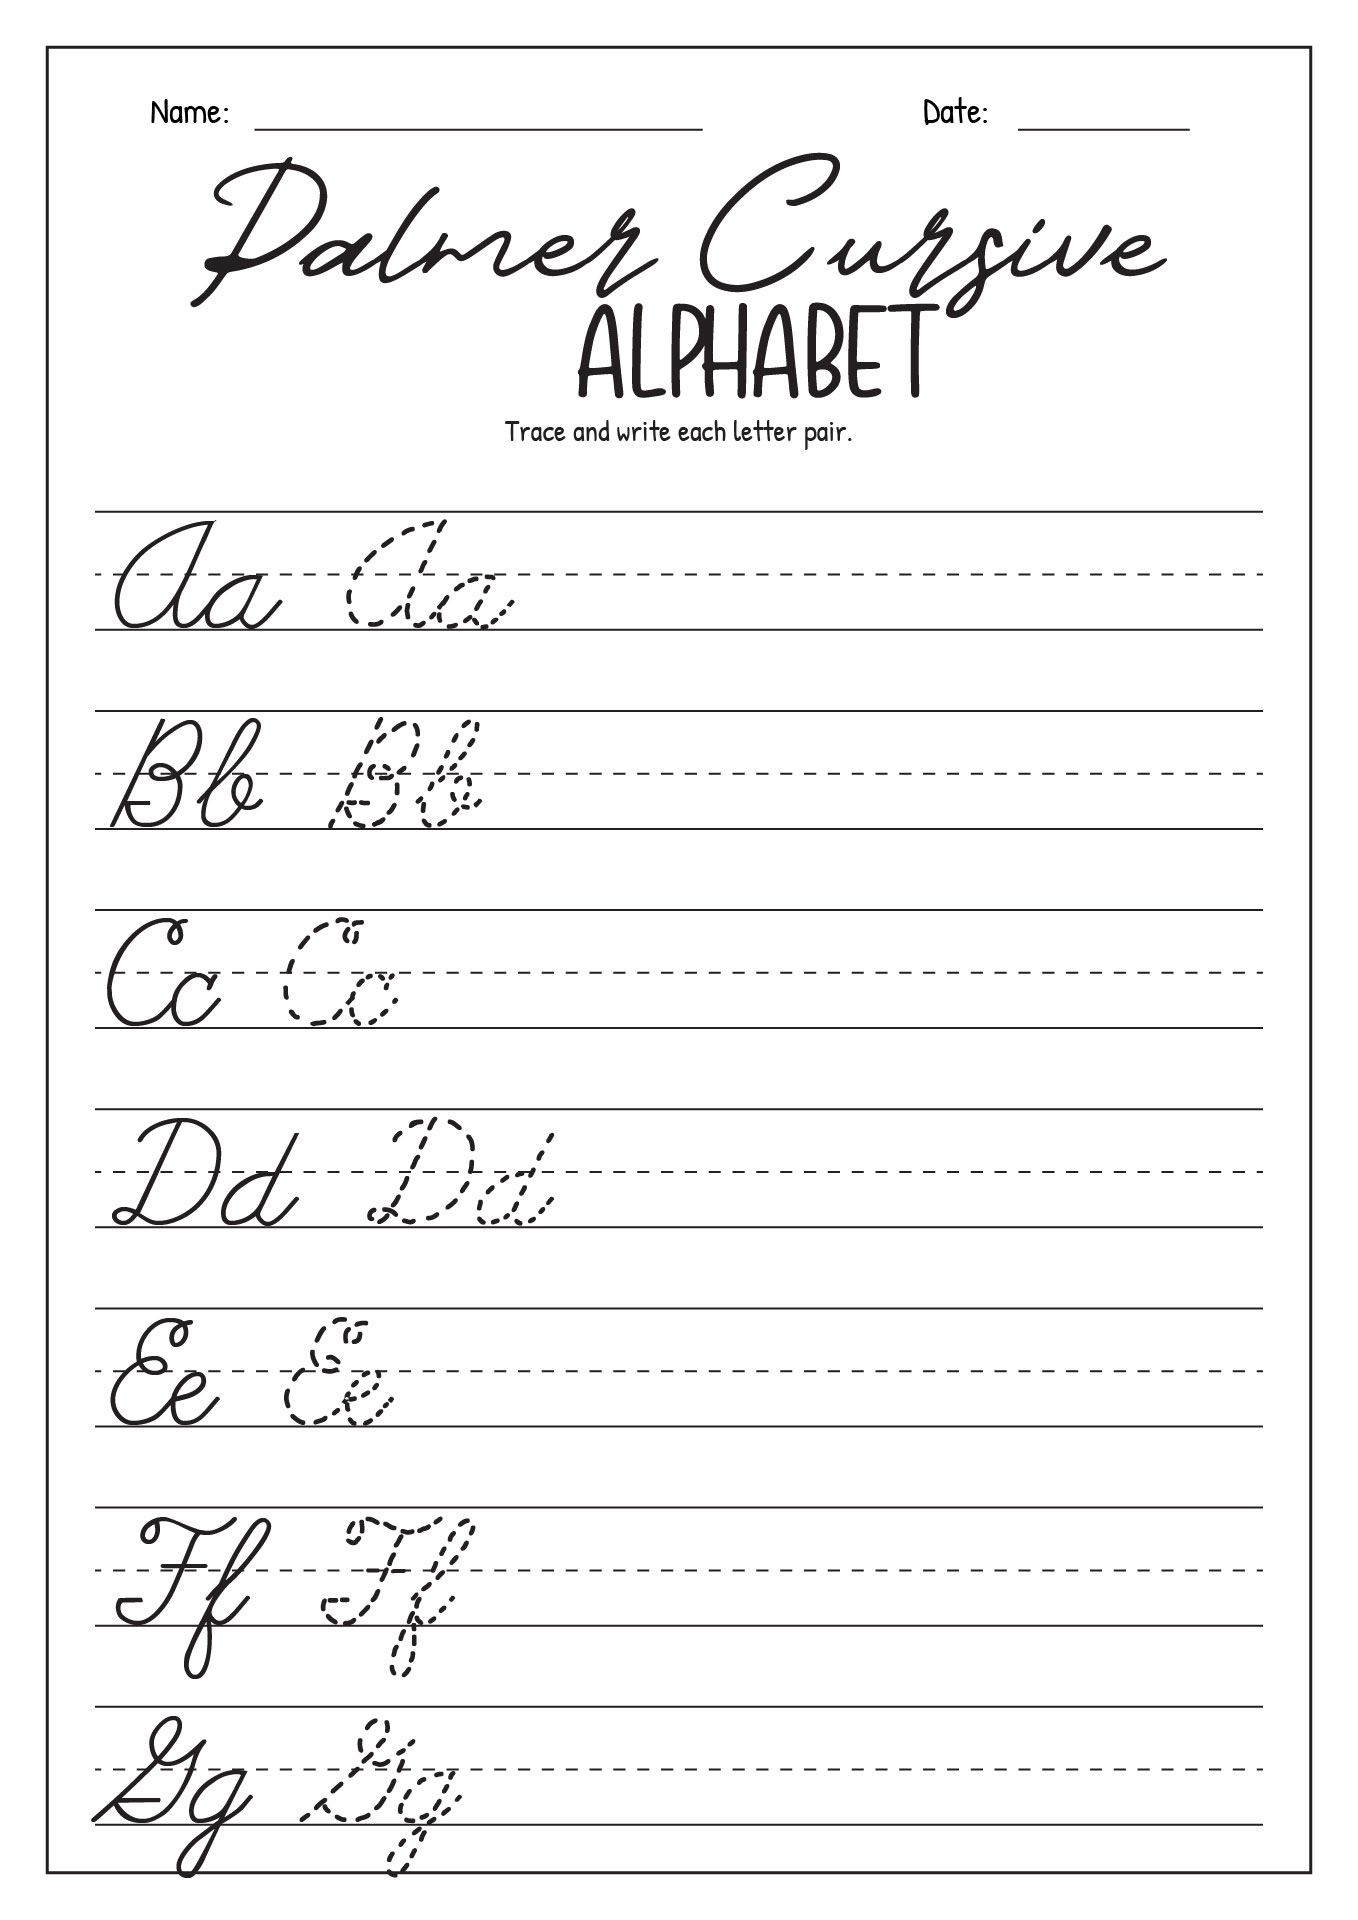 Palmer Cursive Handwriting Alphabet Image